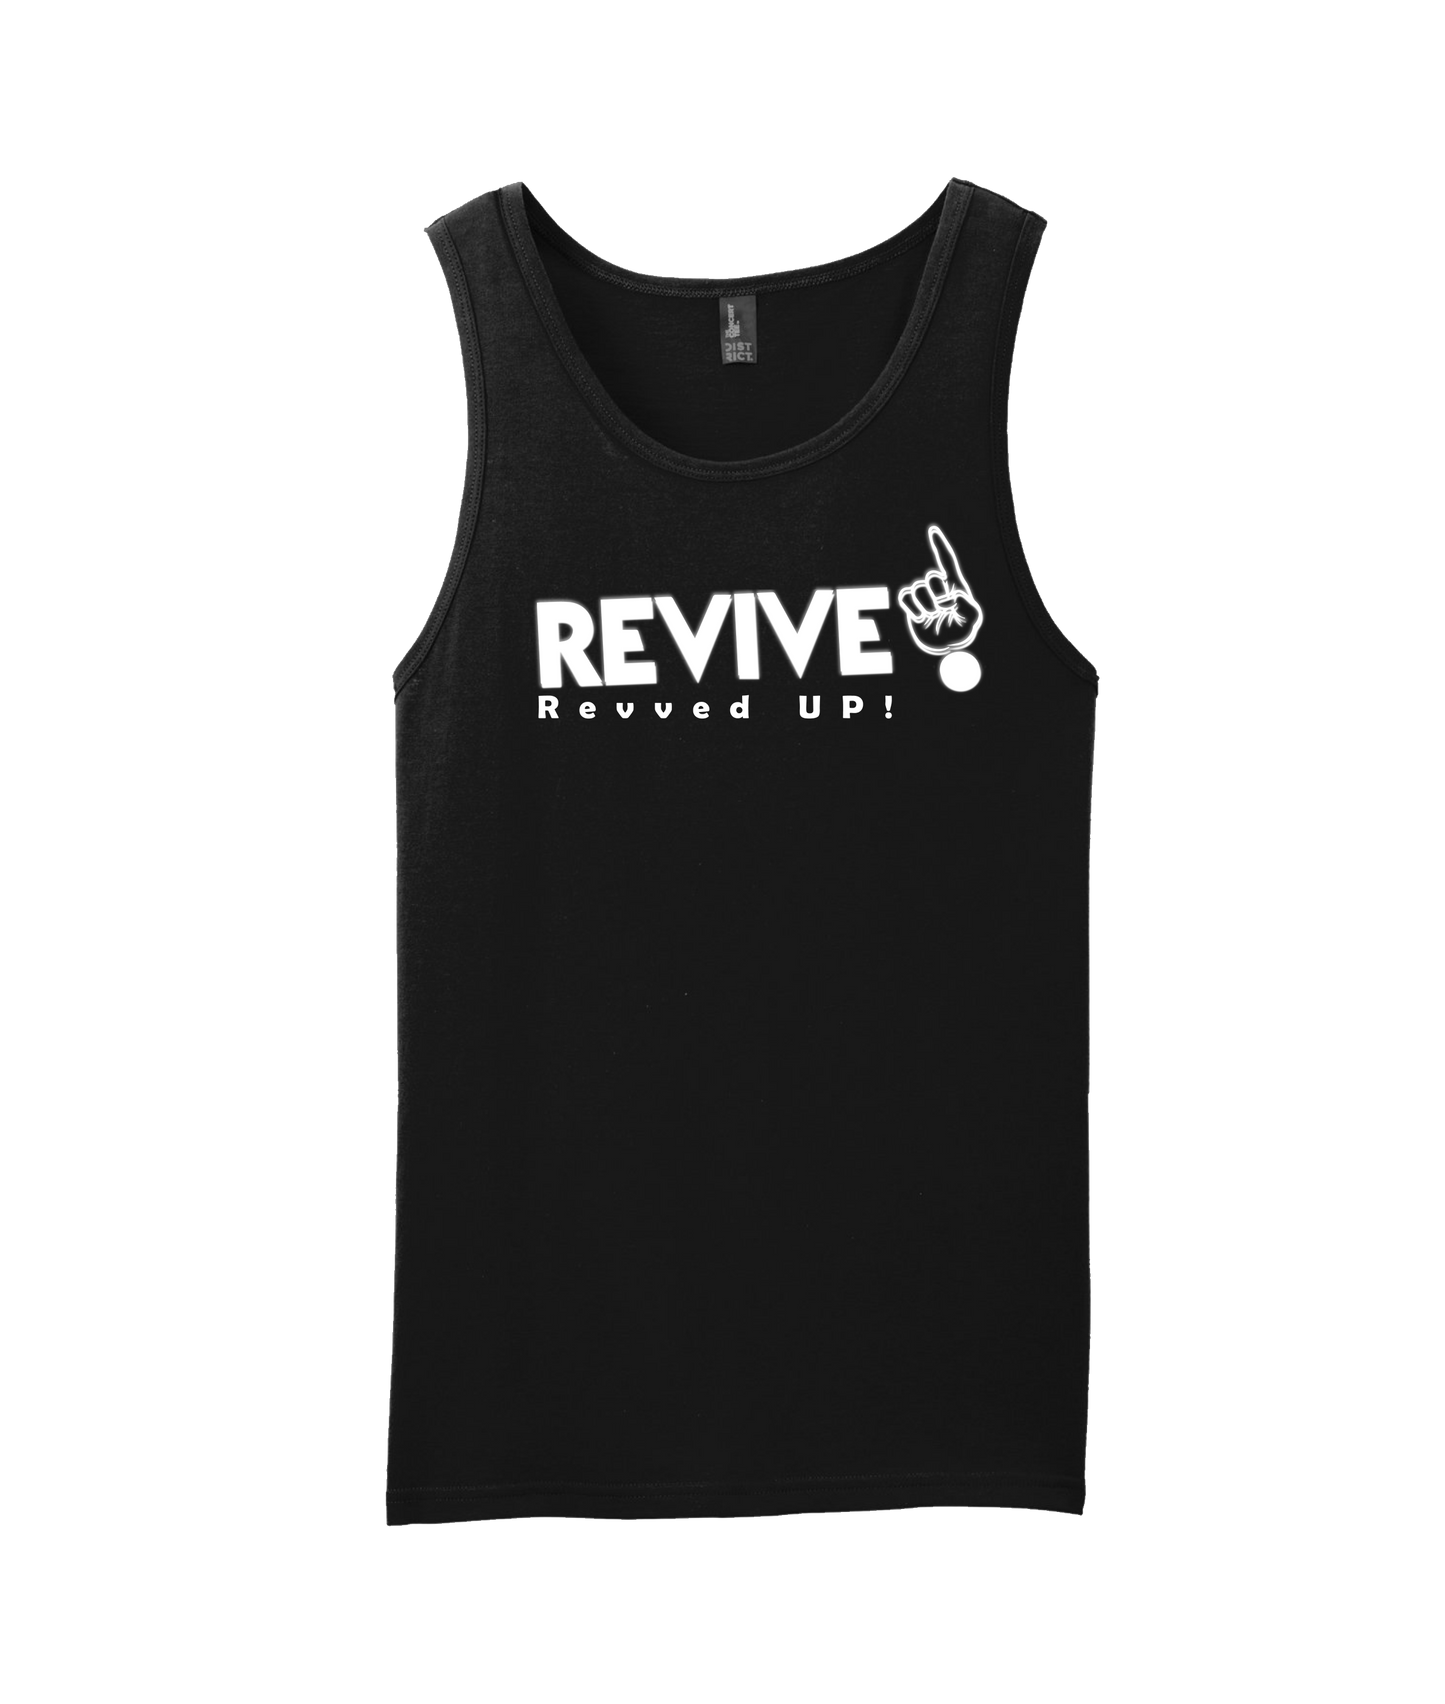 REVIVE - Revive the Nation - Black Tank Top